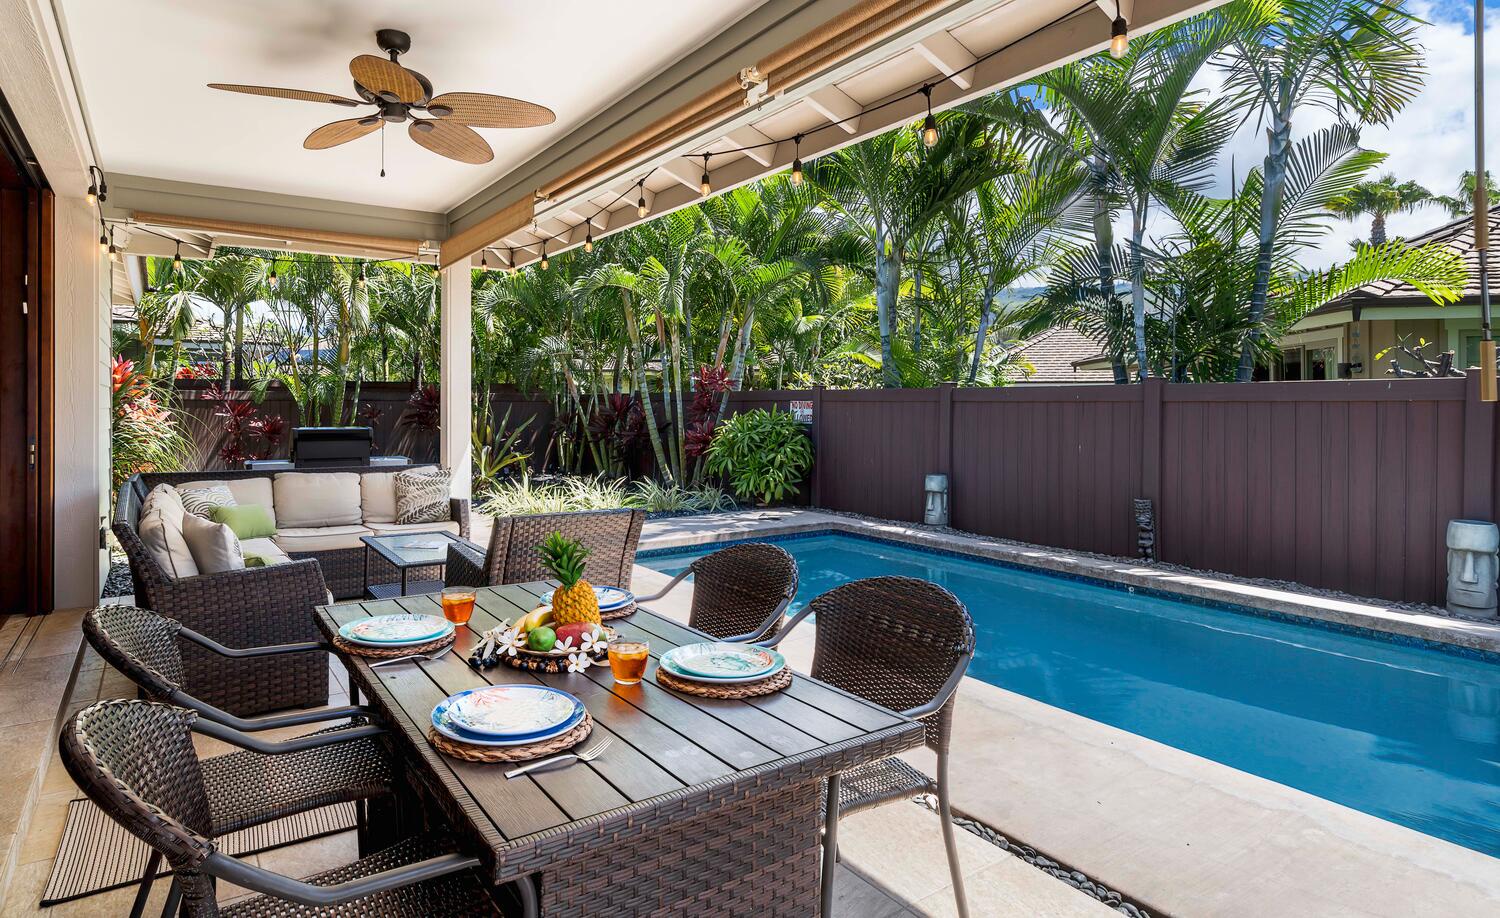 Kailua Kona Vacation Rentals, Holua Kai #32 - Enjoy your morning coffee on the private lanai by the pool.